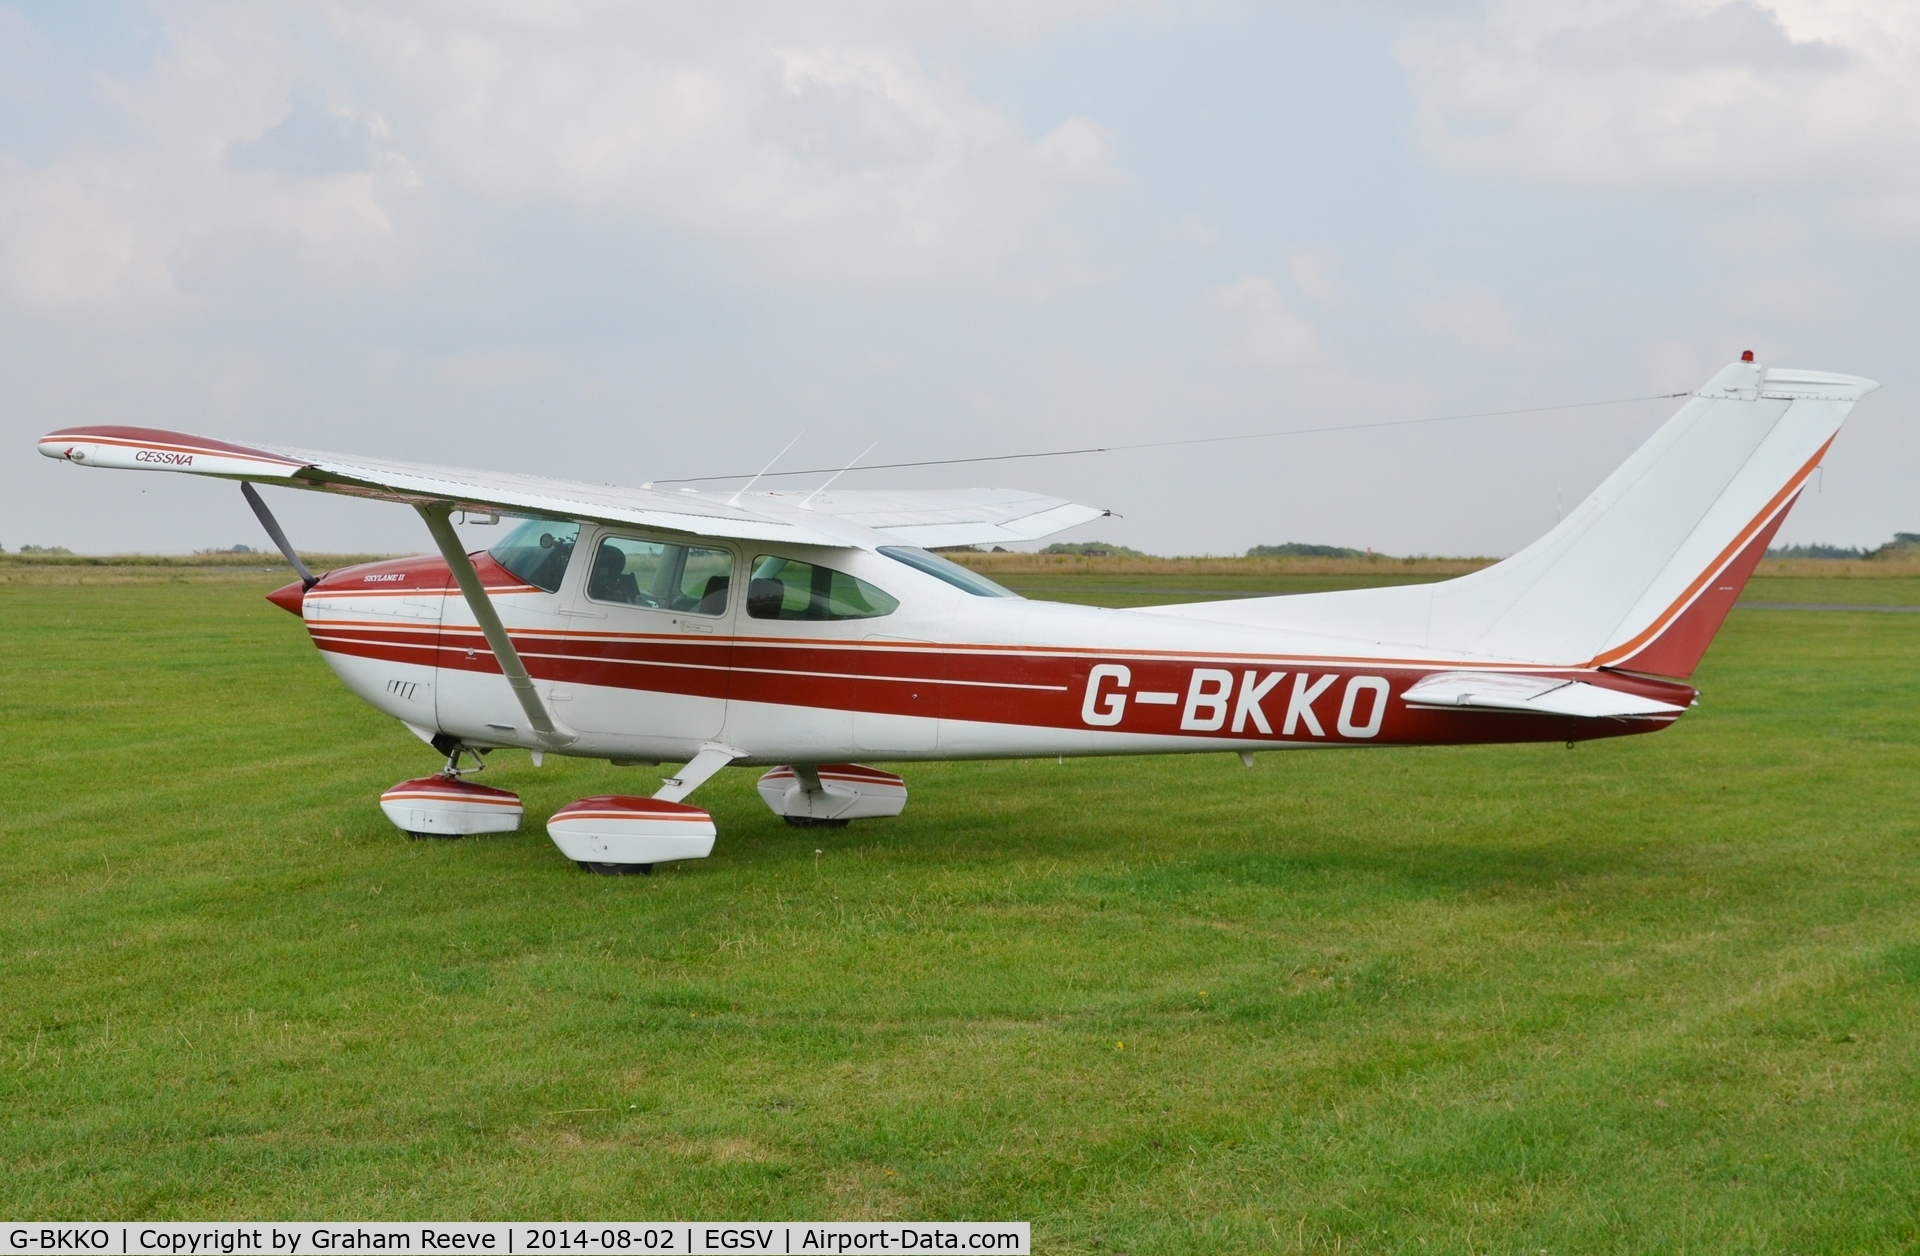 G-BKKO, 1981 Cessna 182R Skylane C/N 182-67852, Parked at Old Buckenham.